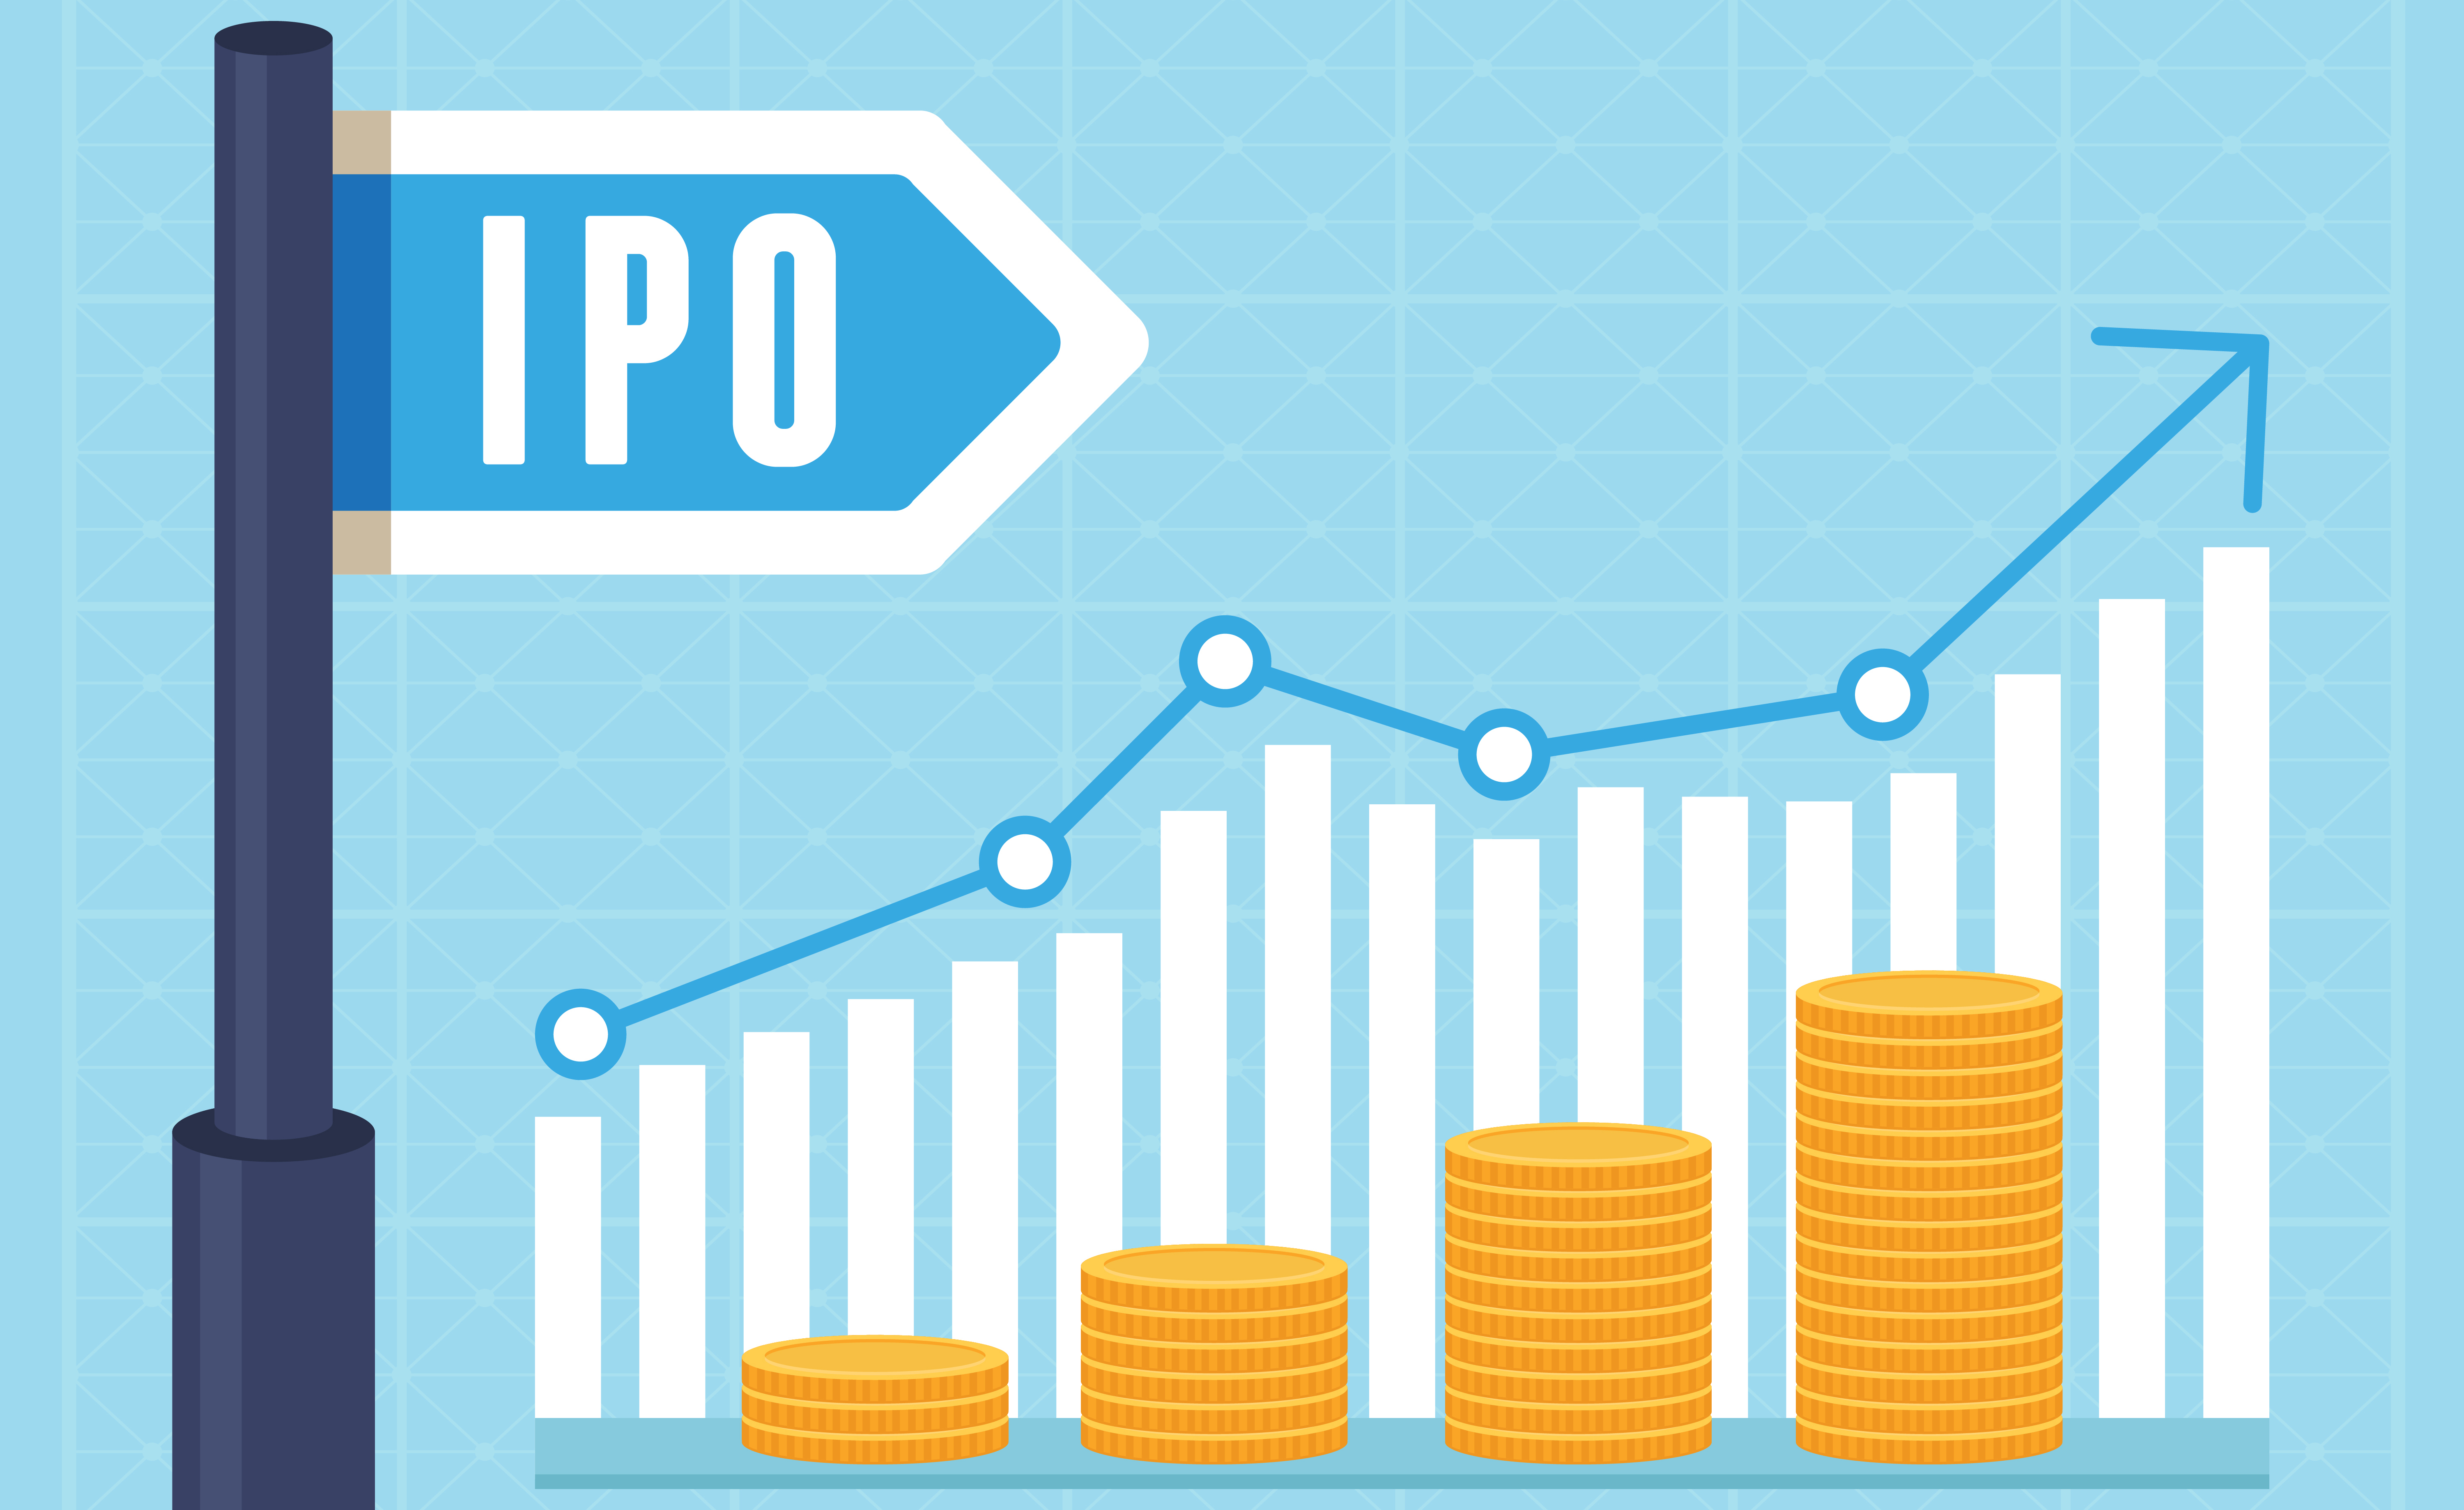 Public offer. IPO картинки. Инвестиции в акции и IPO. IPO компании. Рынок акций.